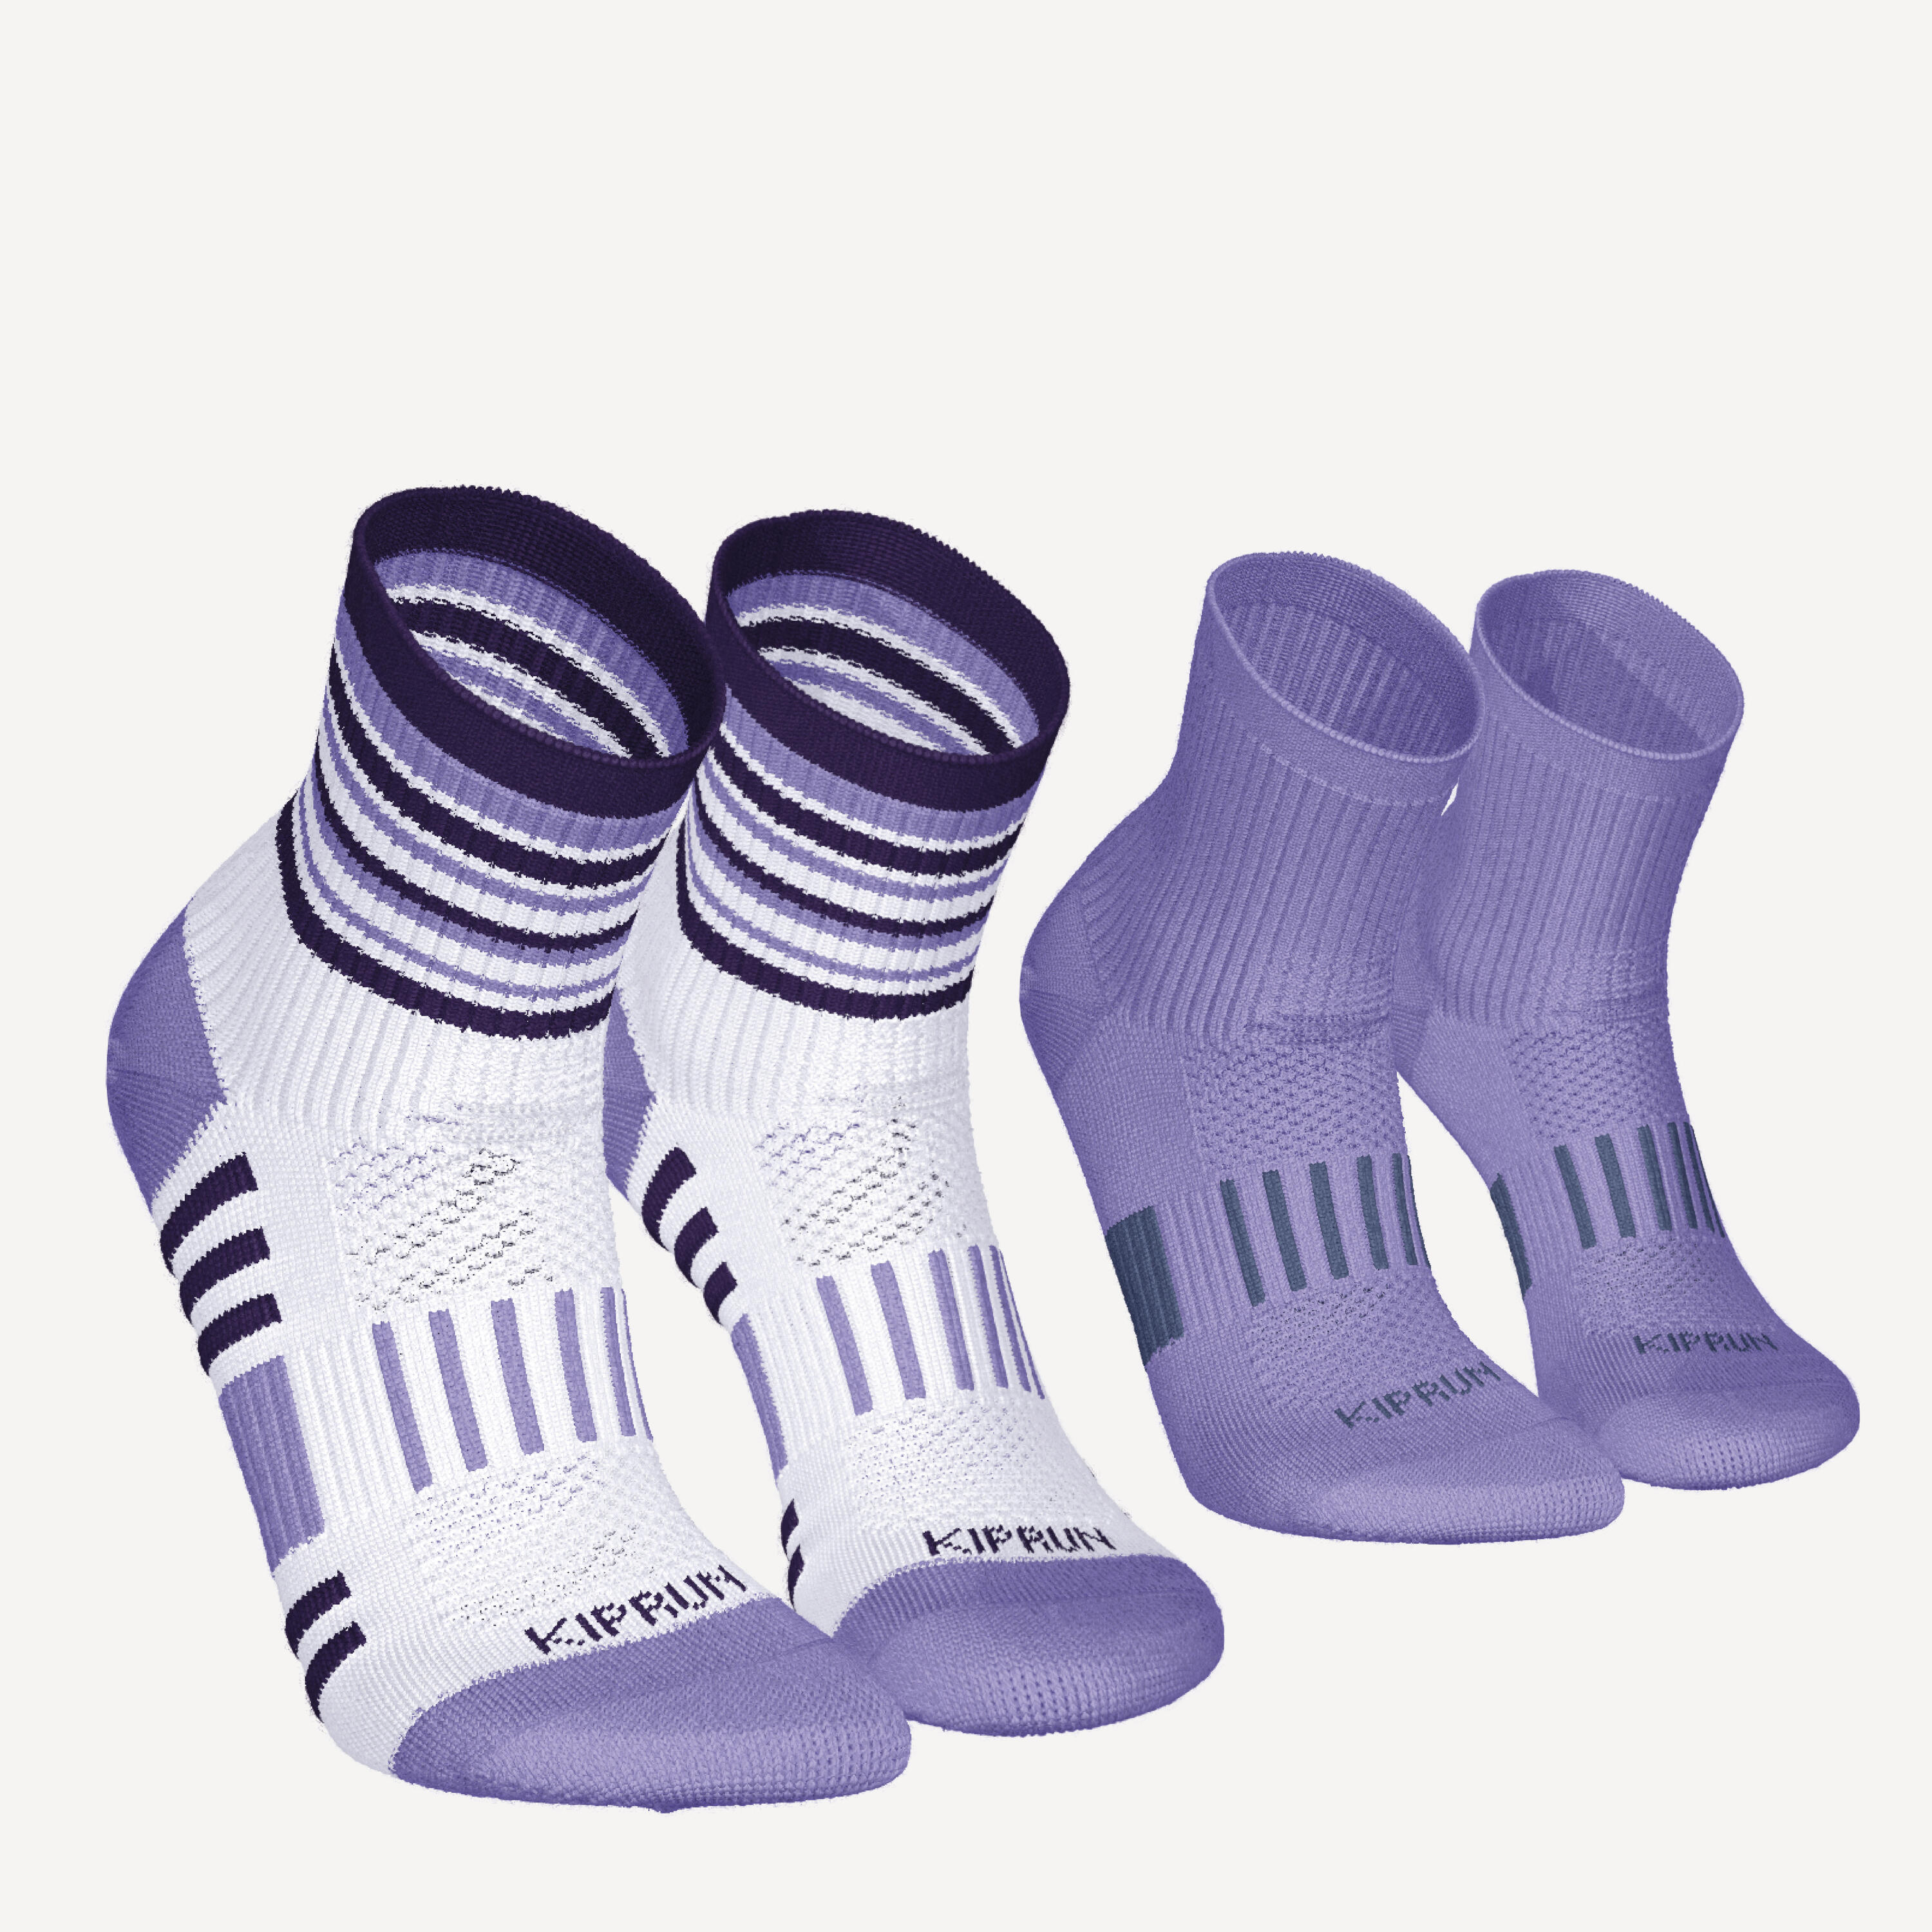 KIPRUN 500 mid kids' comfort running socks 2-pack - striped and plain purple 1/11